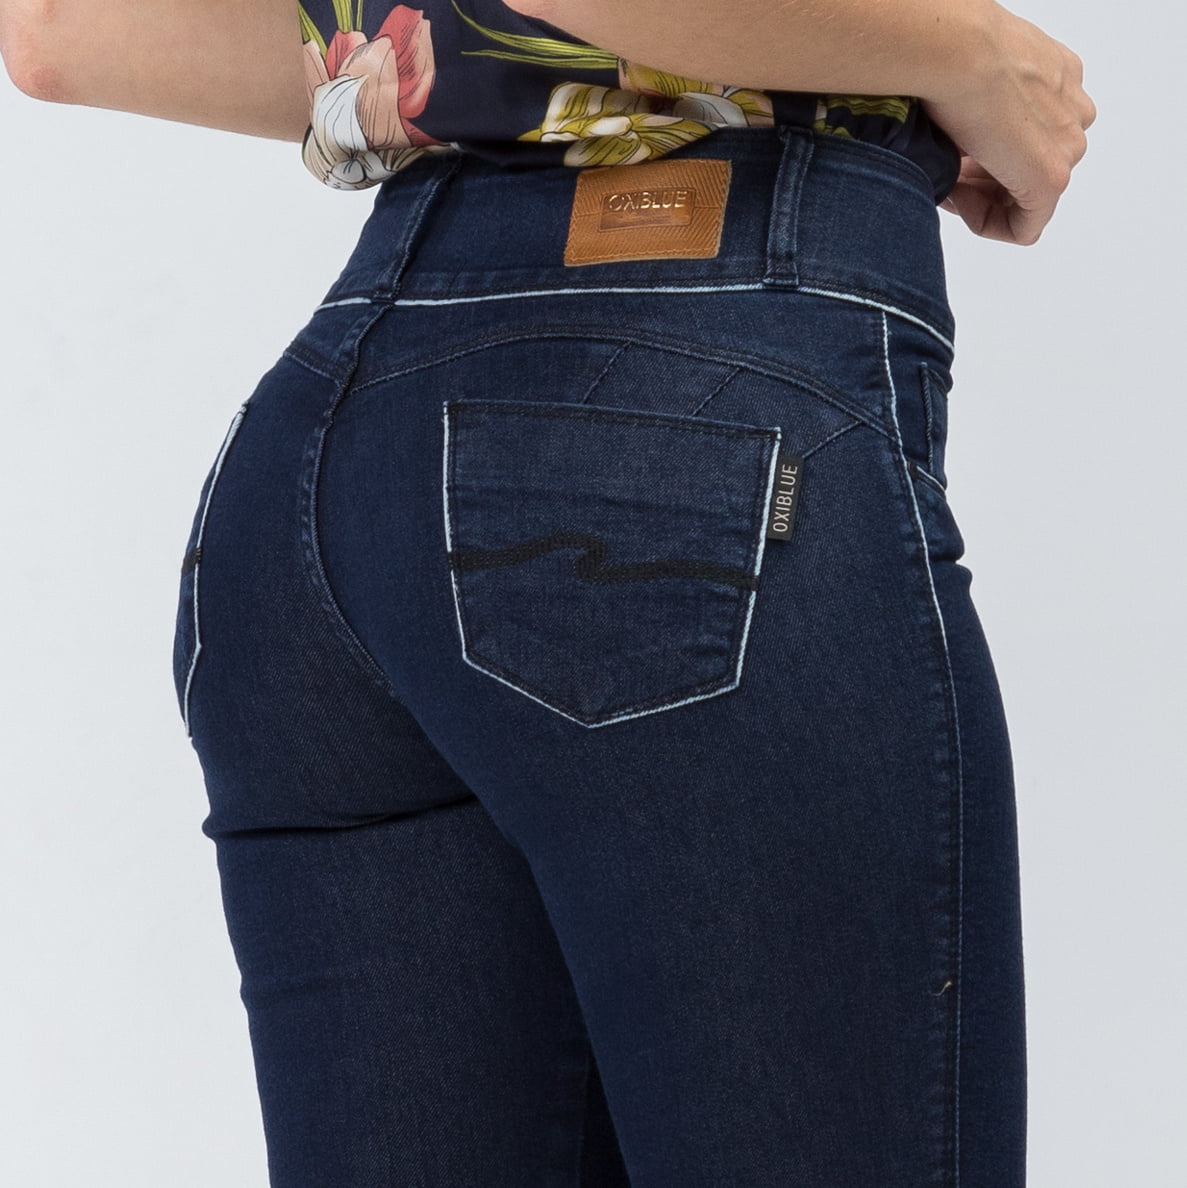 Calça Jeans Feminina Skinny - Oxiblue Jeans